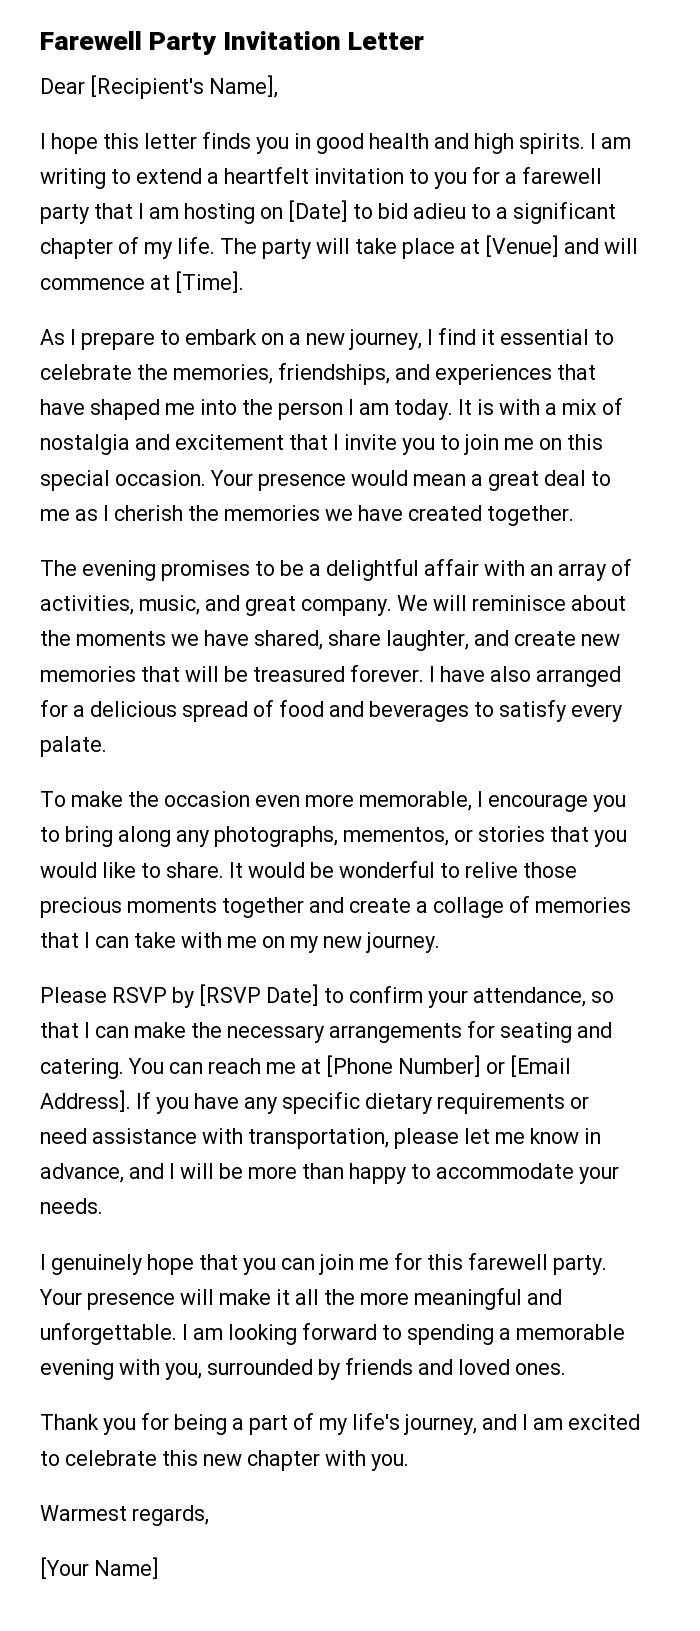 Farewell Party Invitation Letter